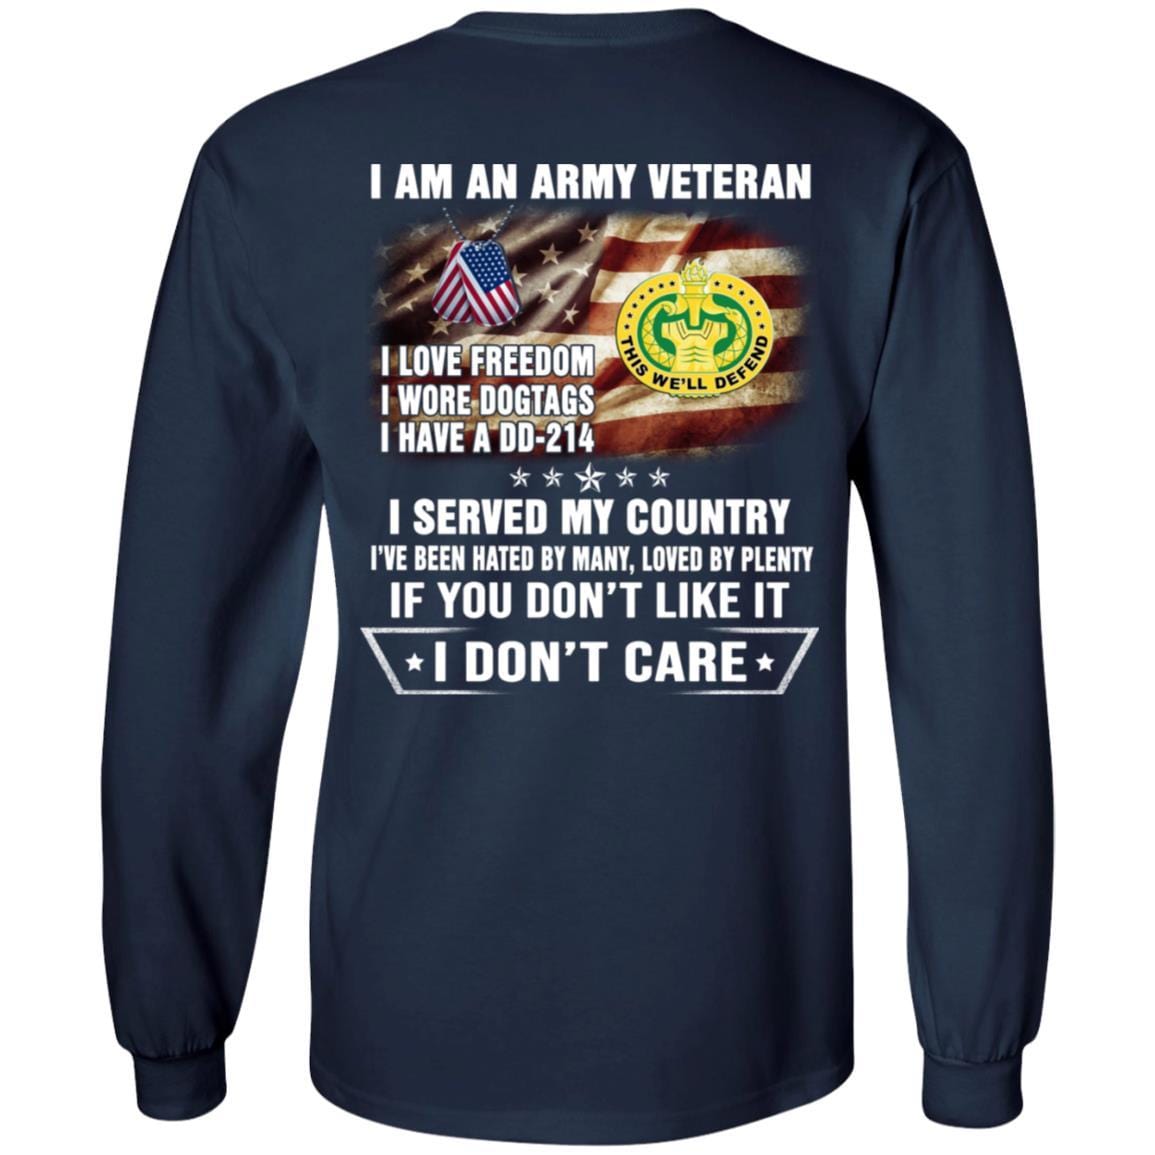 T-Shirt "I Am An Army Drill Sergeant Veteran" On Back-TShirt-Army-Veterans Nation